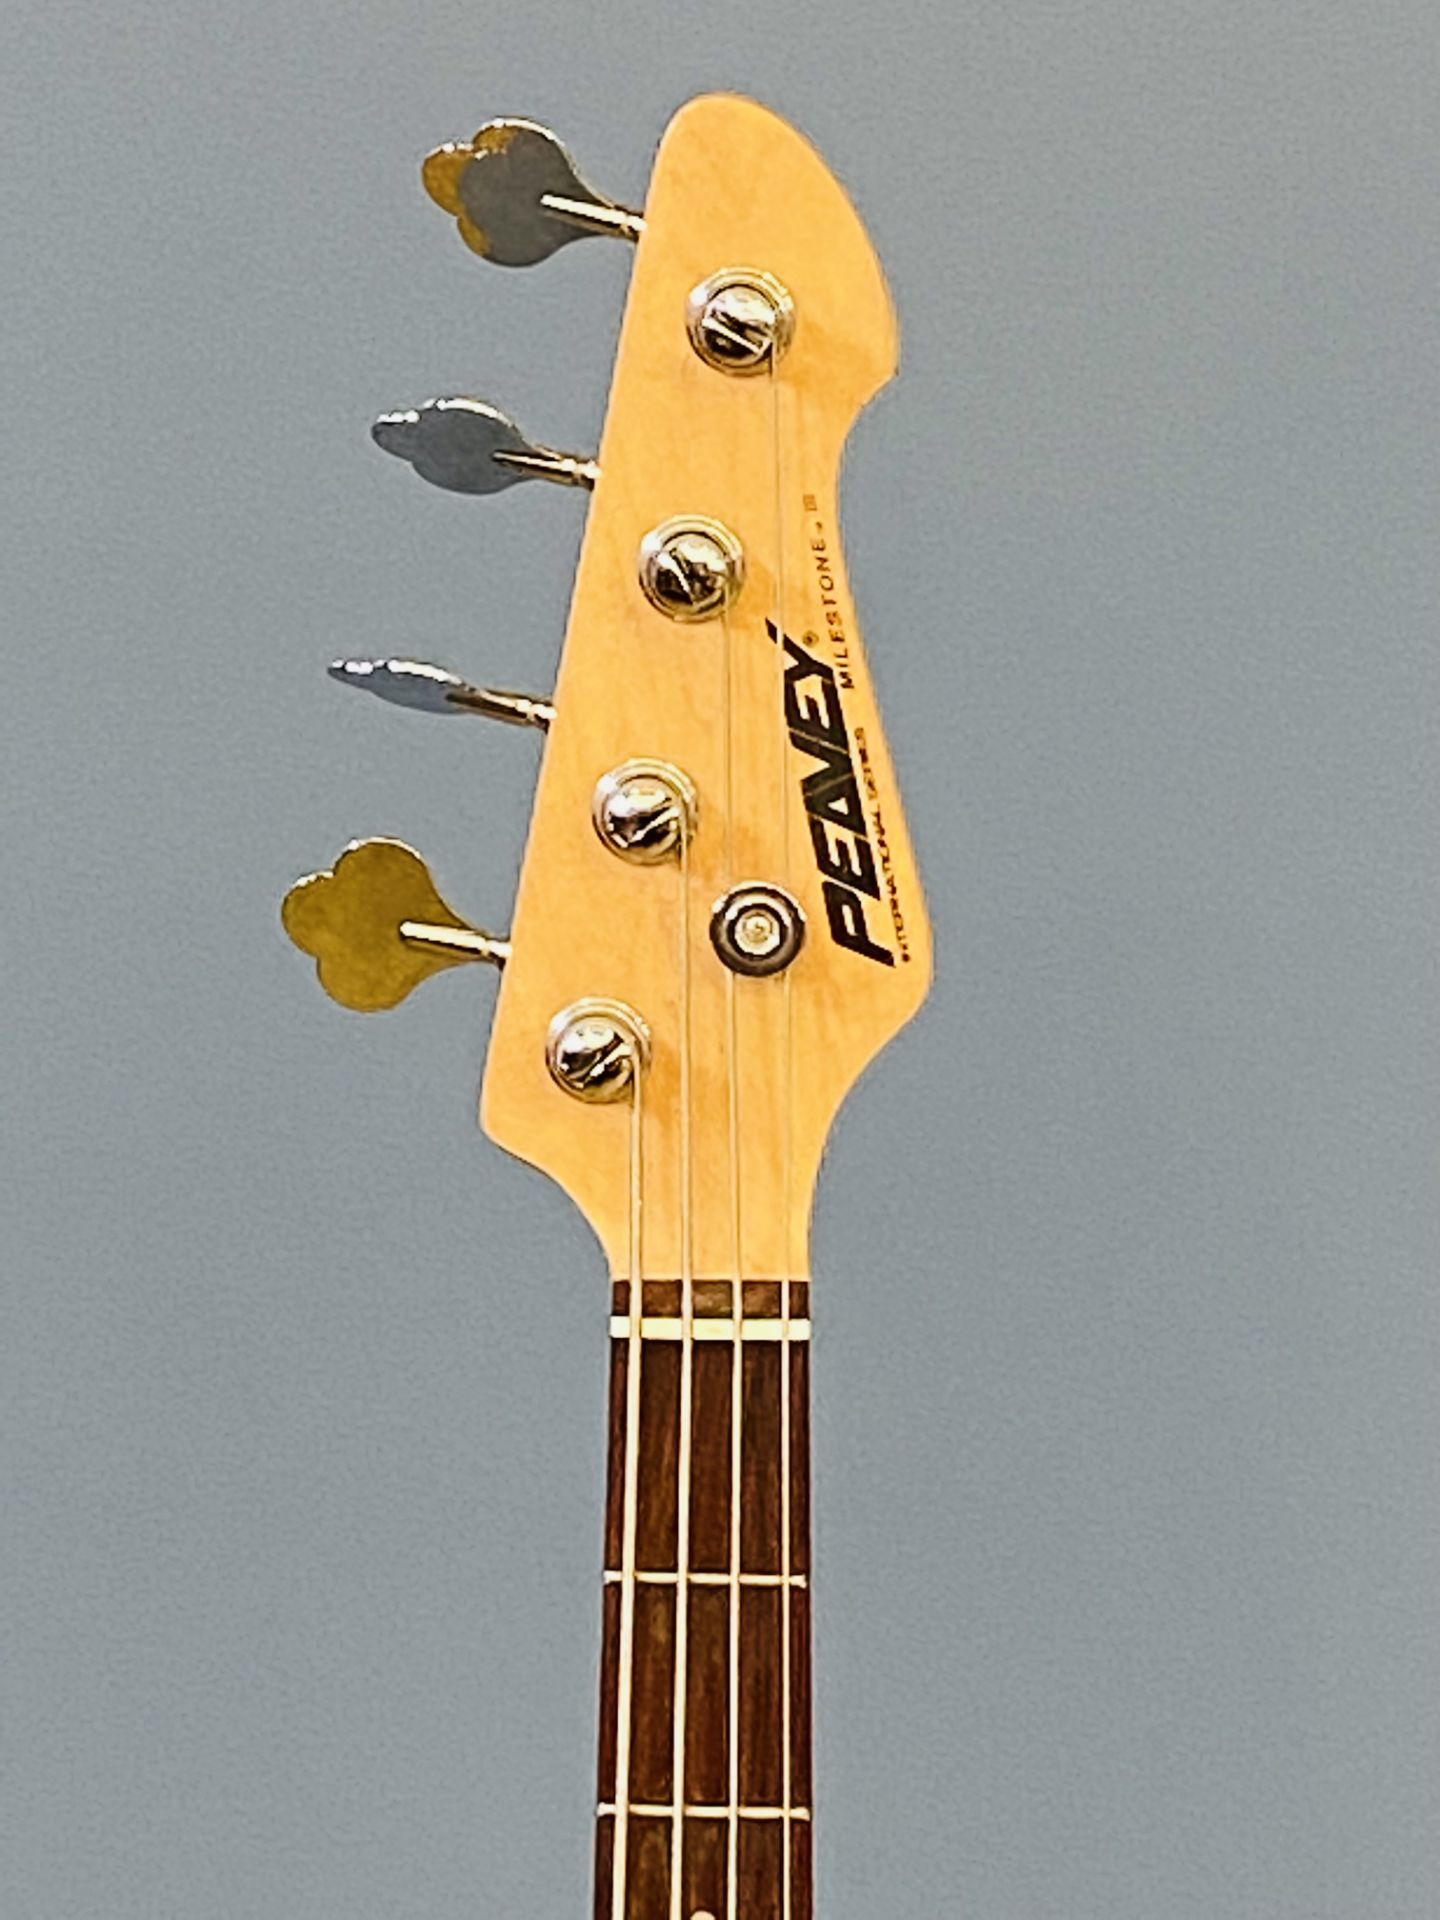 Peavey Milestone bass guitar - Image 2 of 4